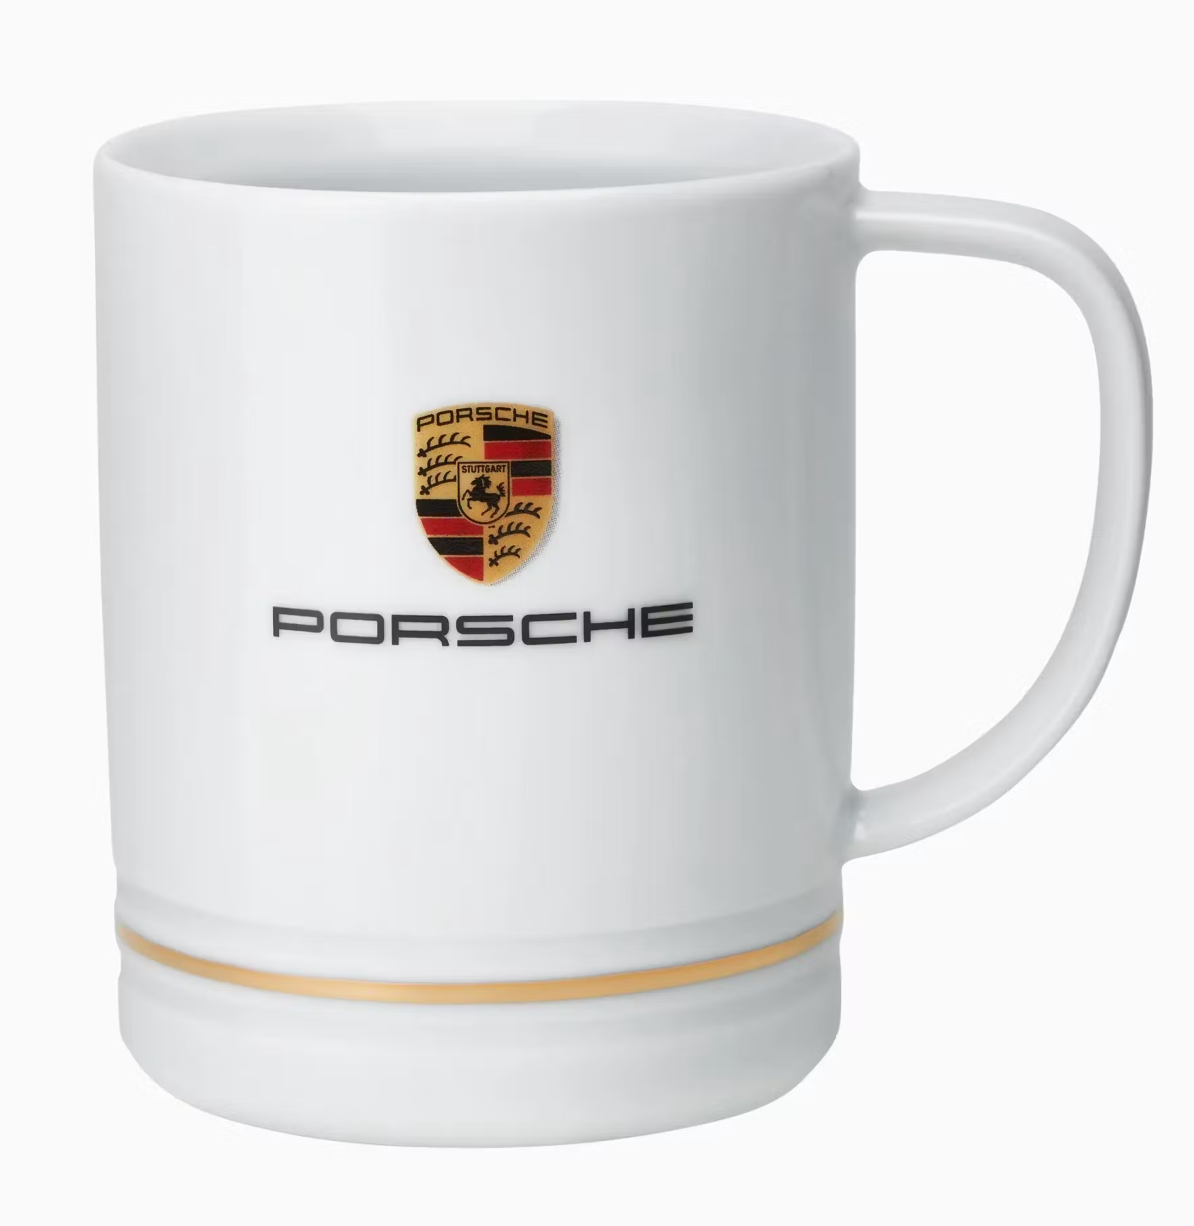 Porsche Coffee Mug